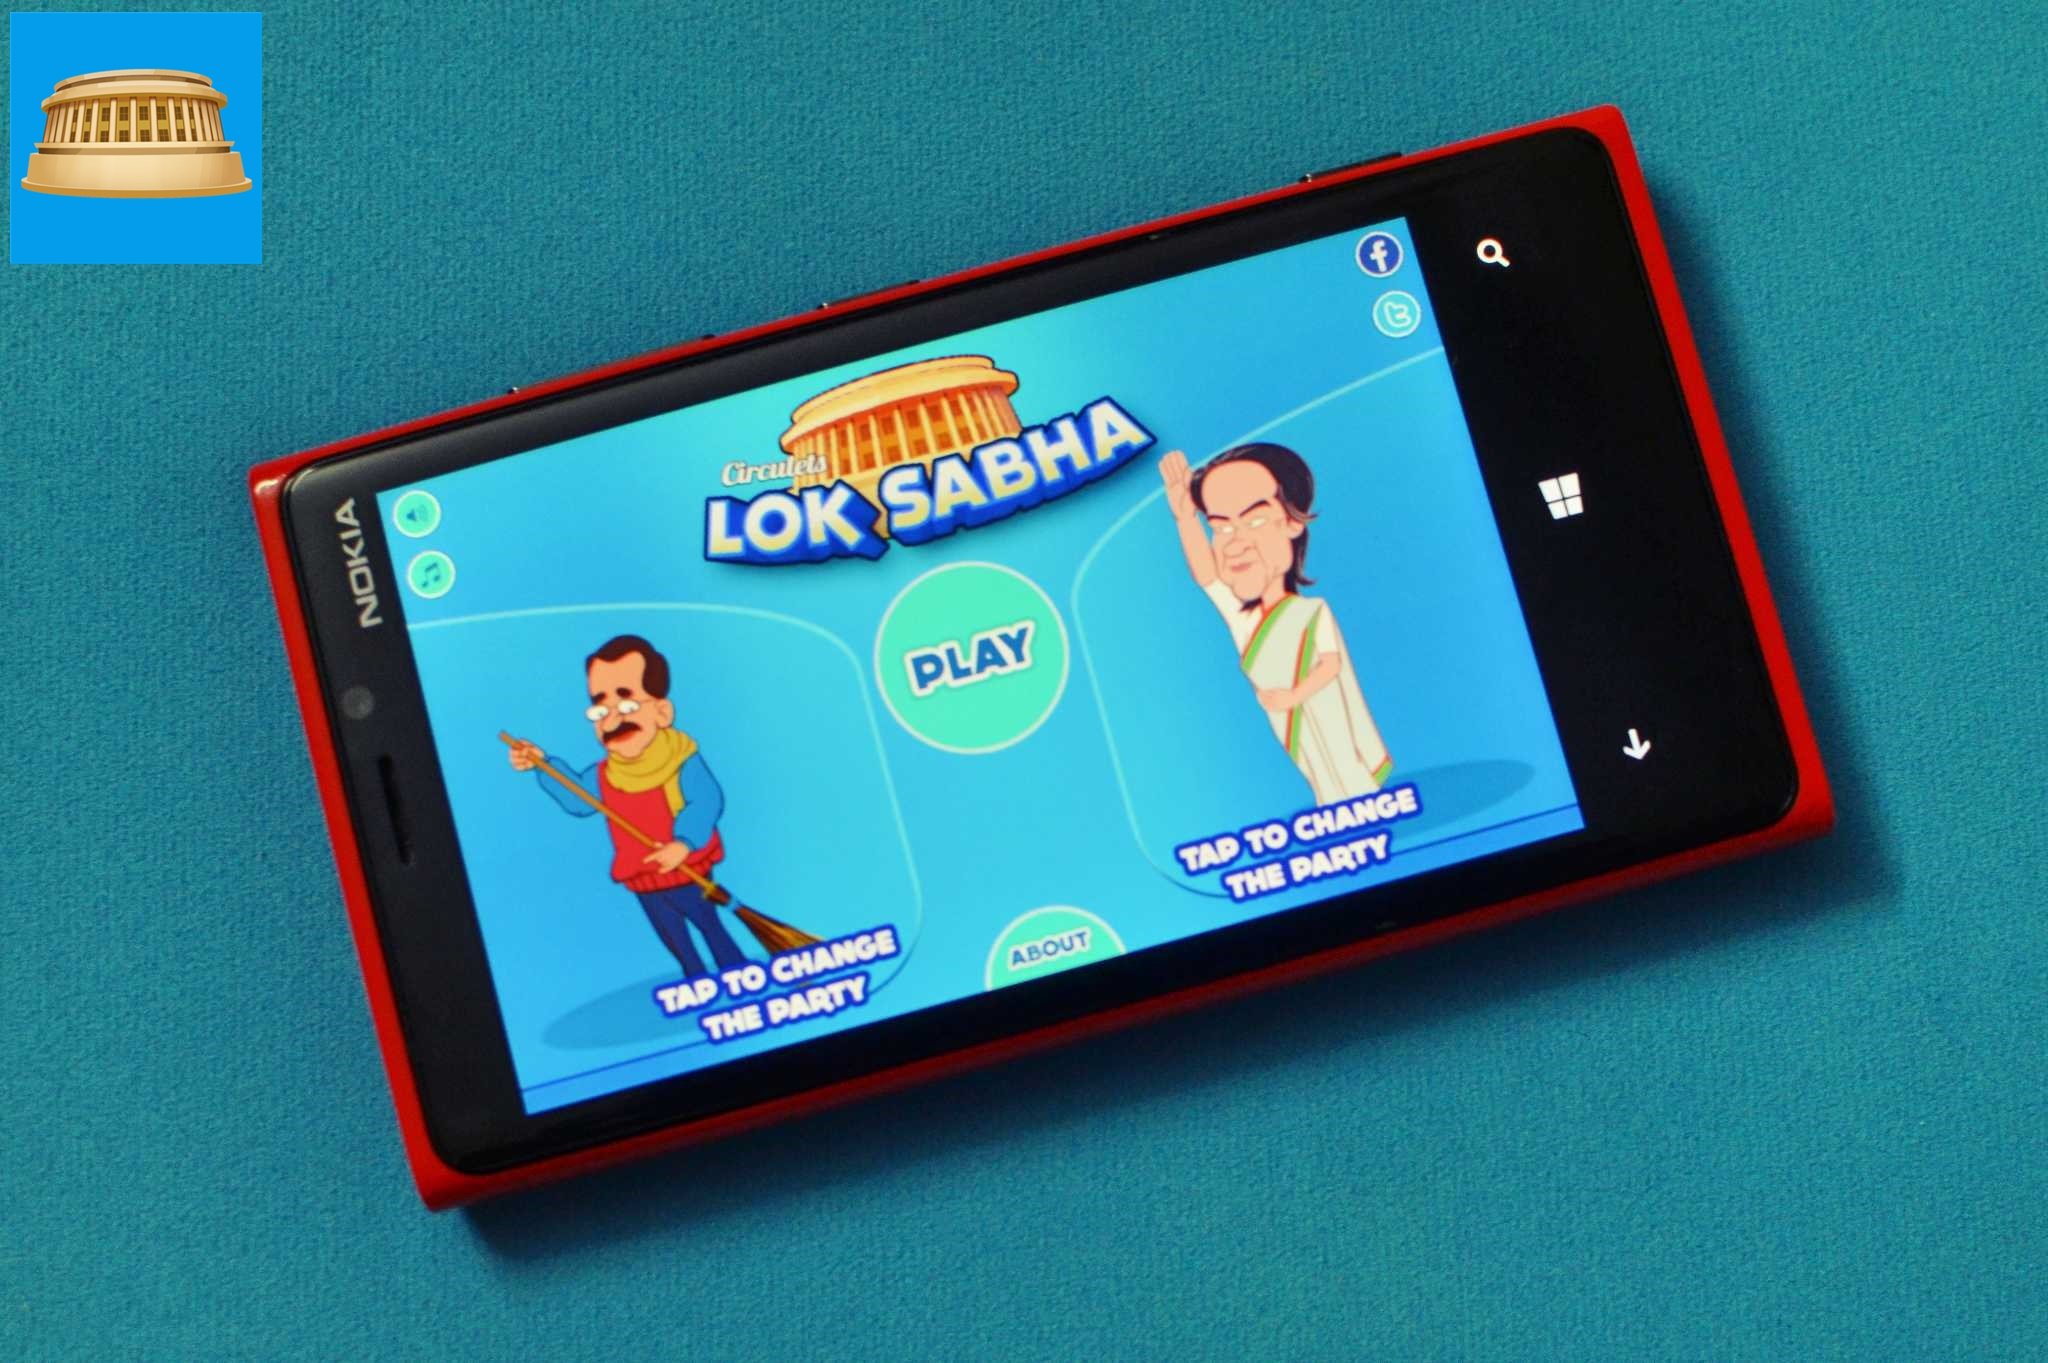 Lok Sabha is a fun Windows Phone game as India heads to the polls